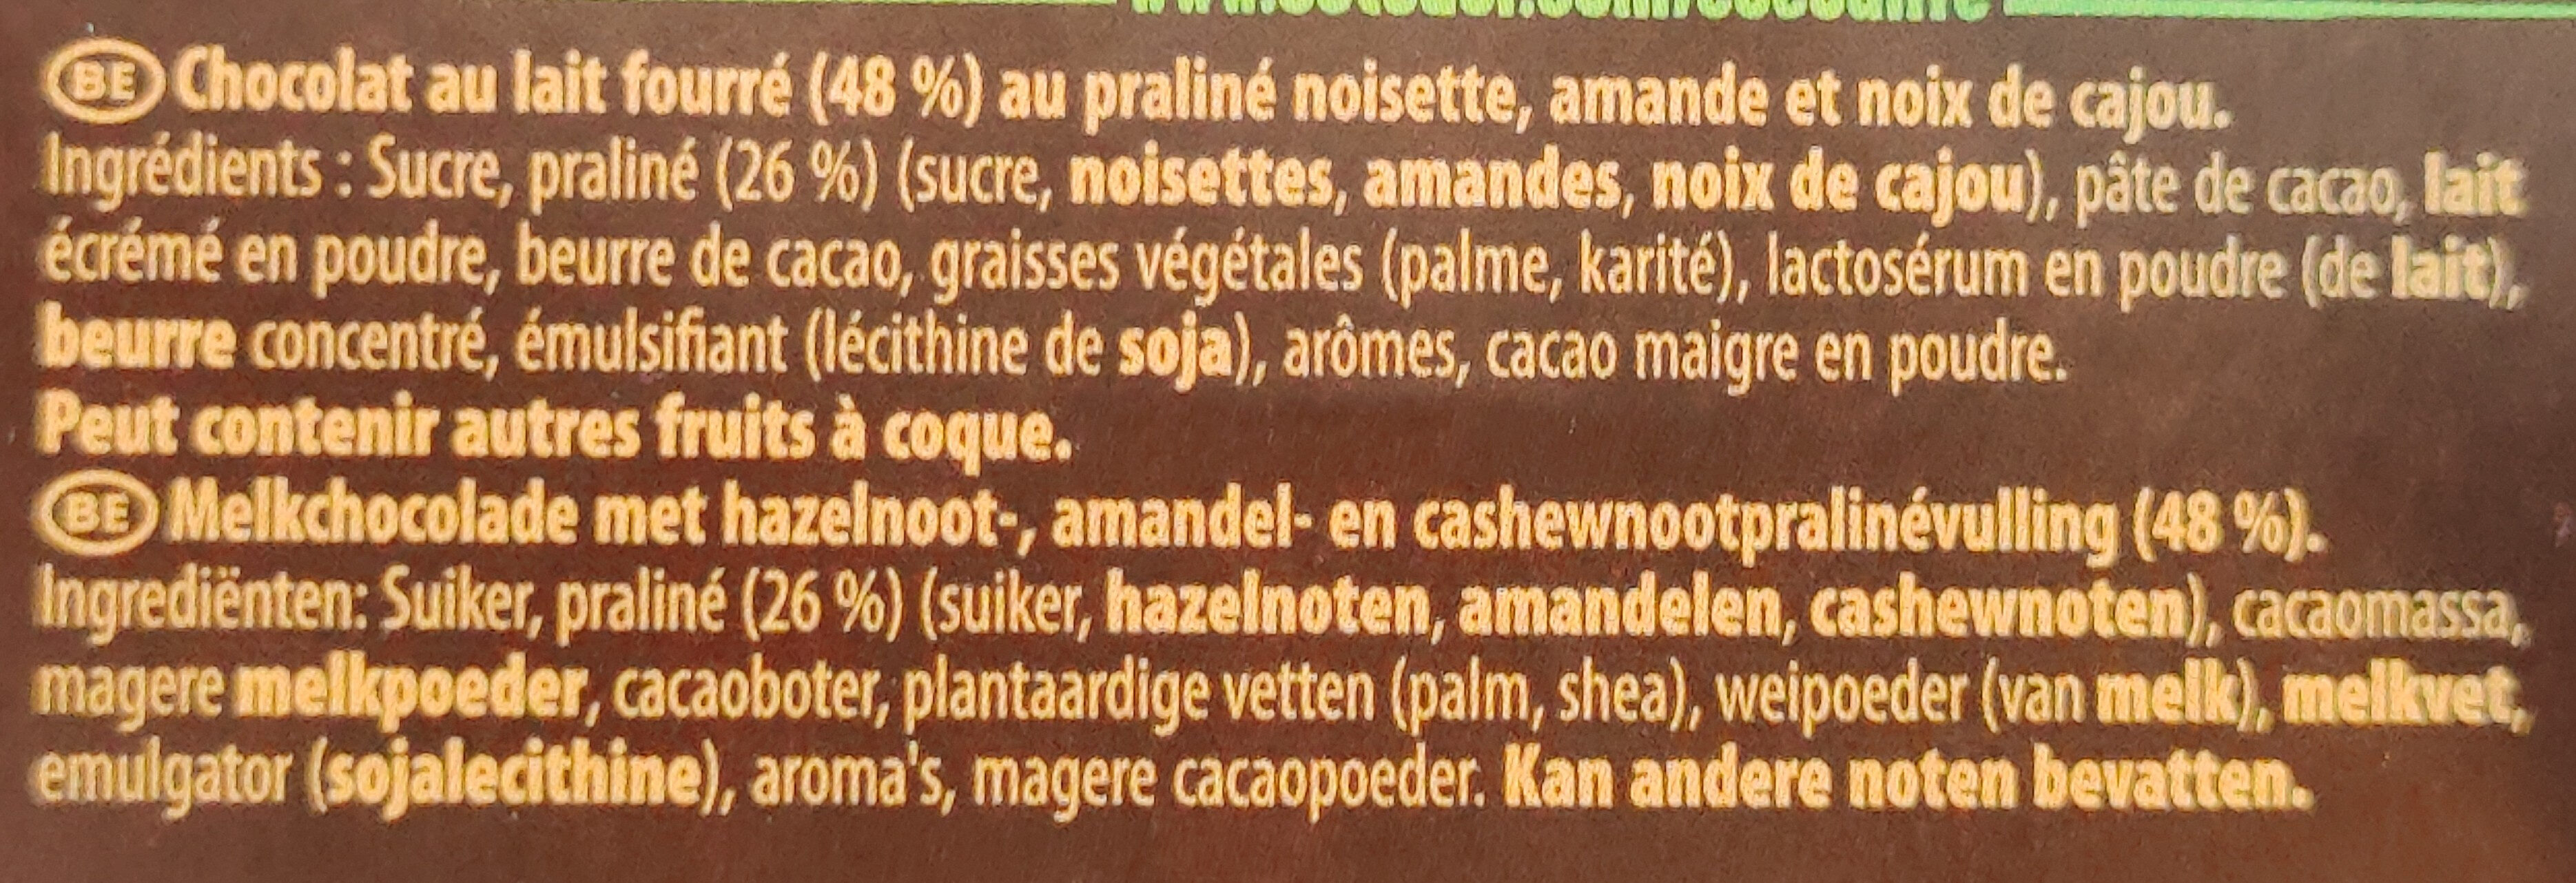 Double lait praliné - Ingrediënten - fr